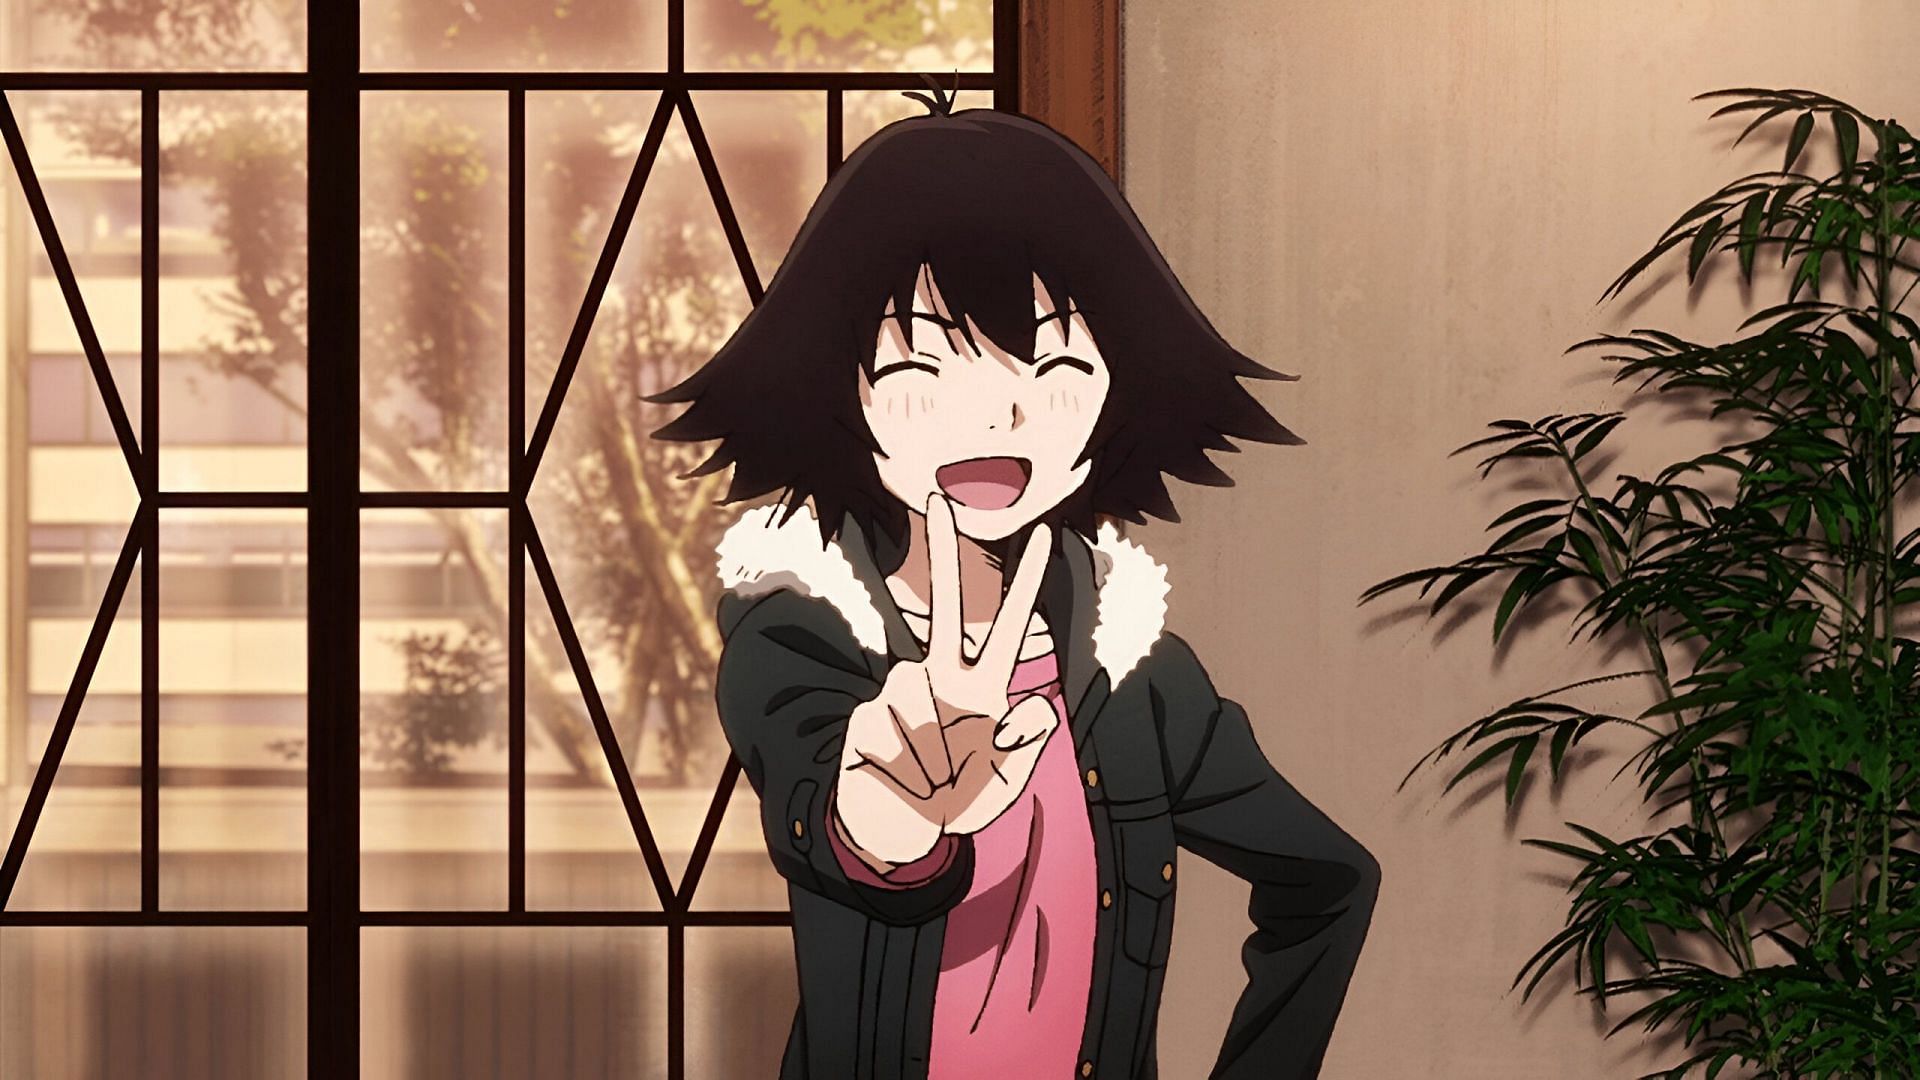 Haru as seen in the anime (Image via Doga Koba)